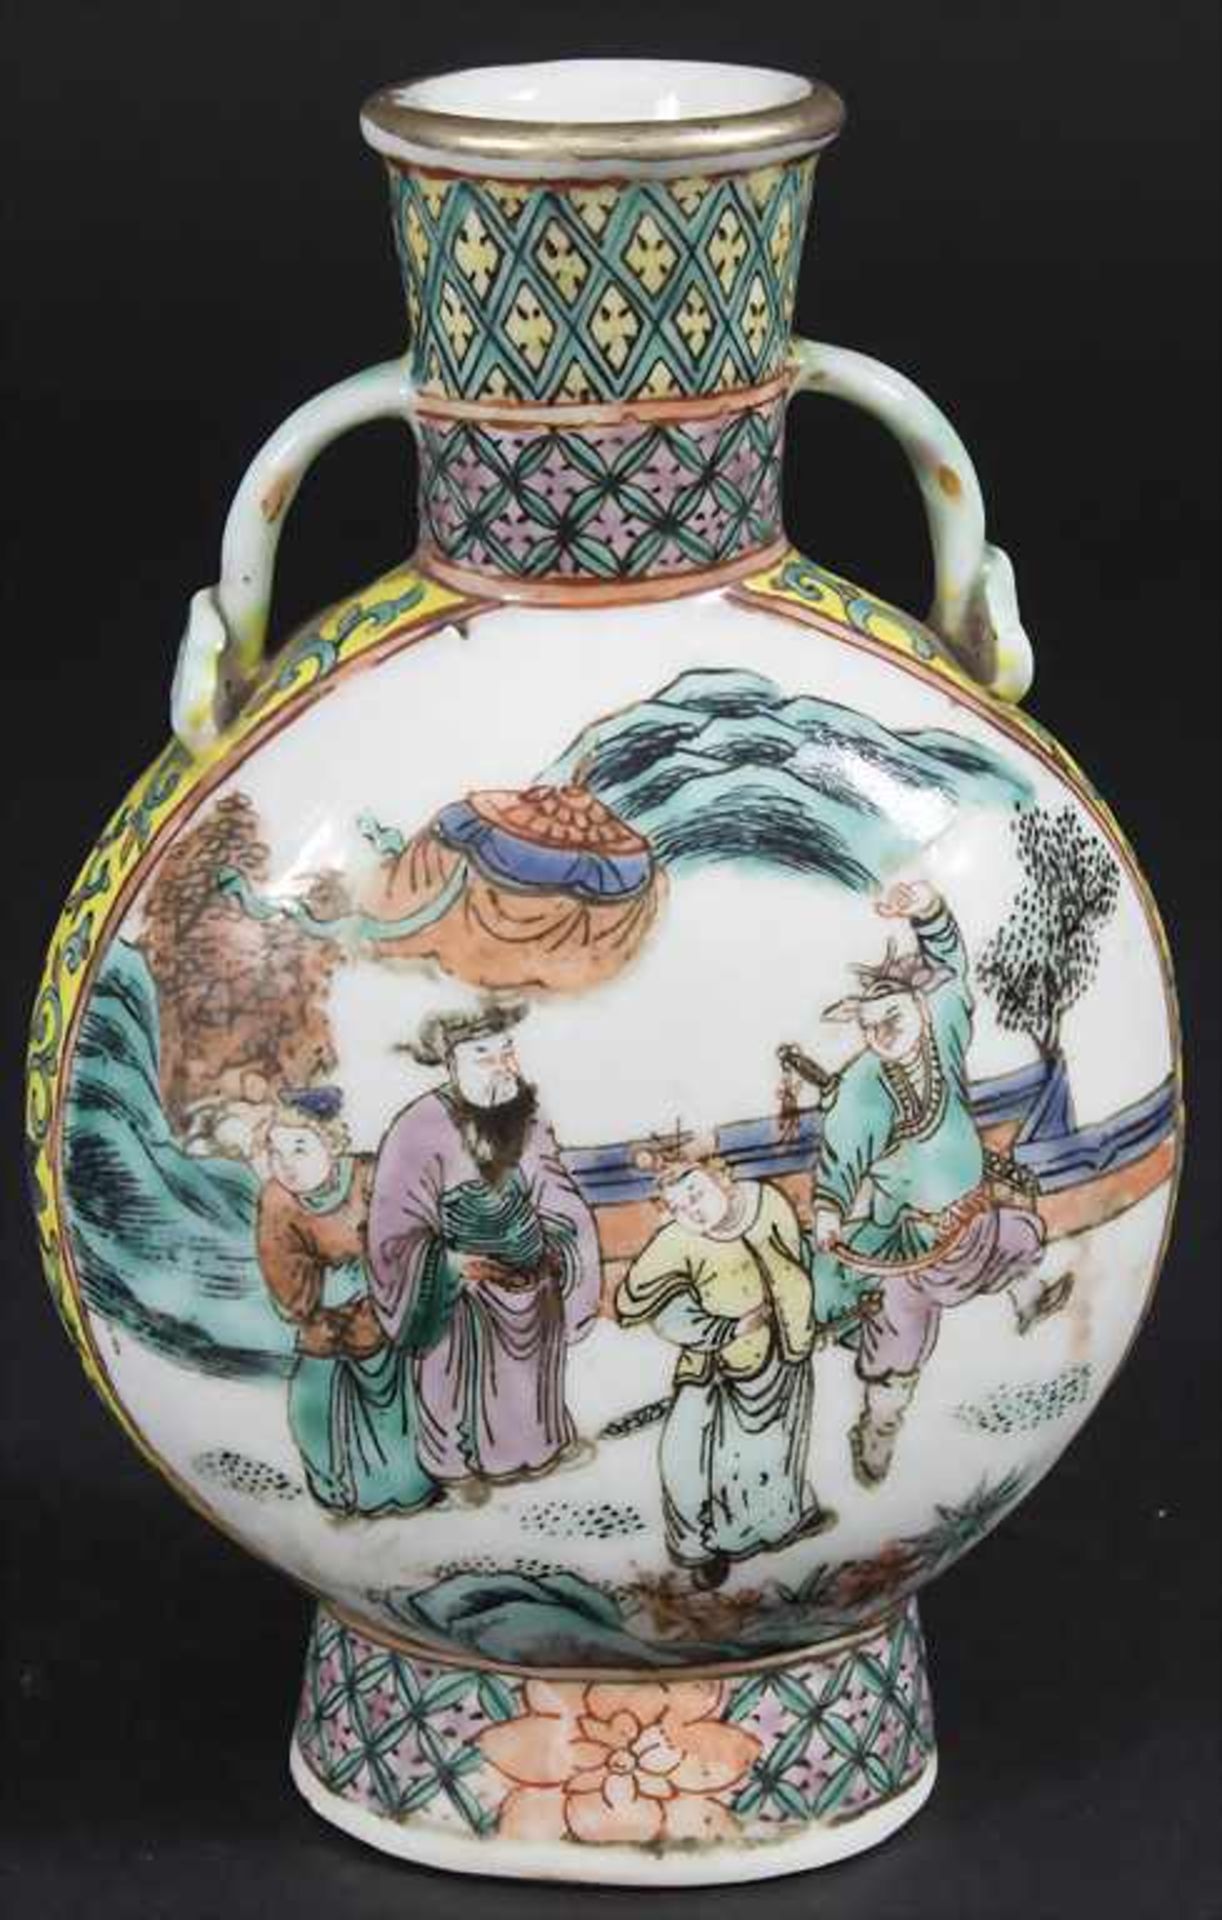 Porzellan-Ziervase / A porcelain decorative vase, China, Qing-Dynastie (1644-1911)